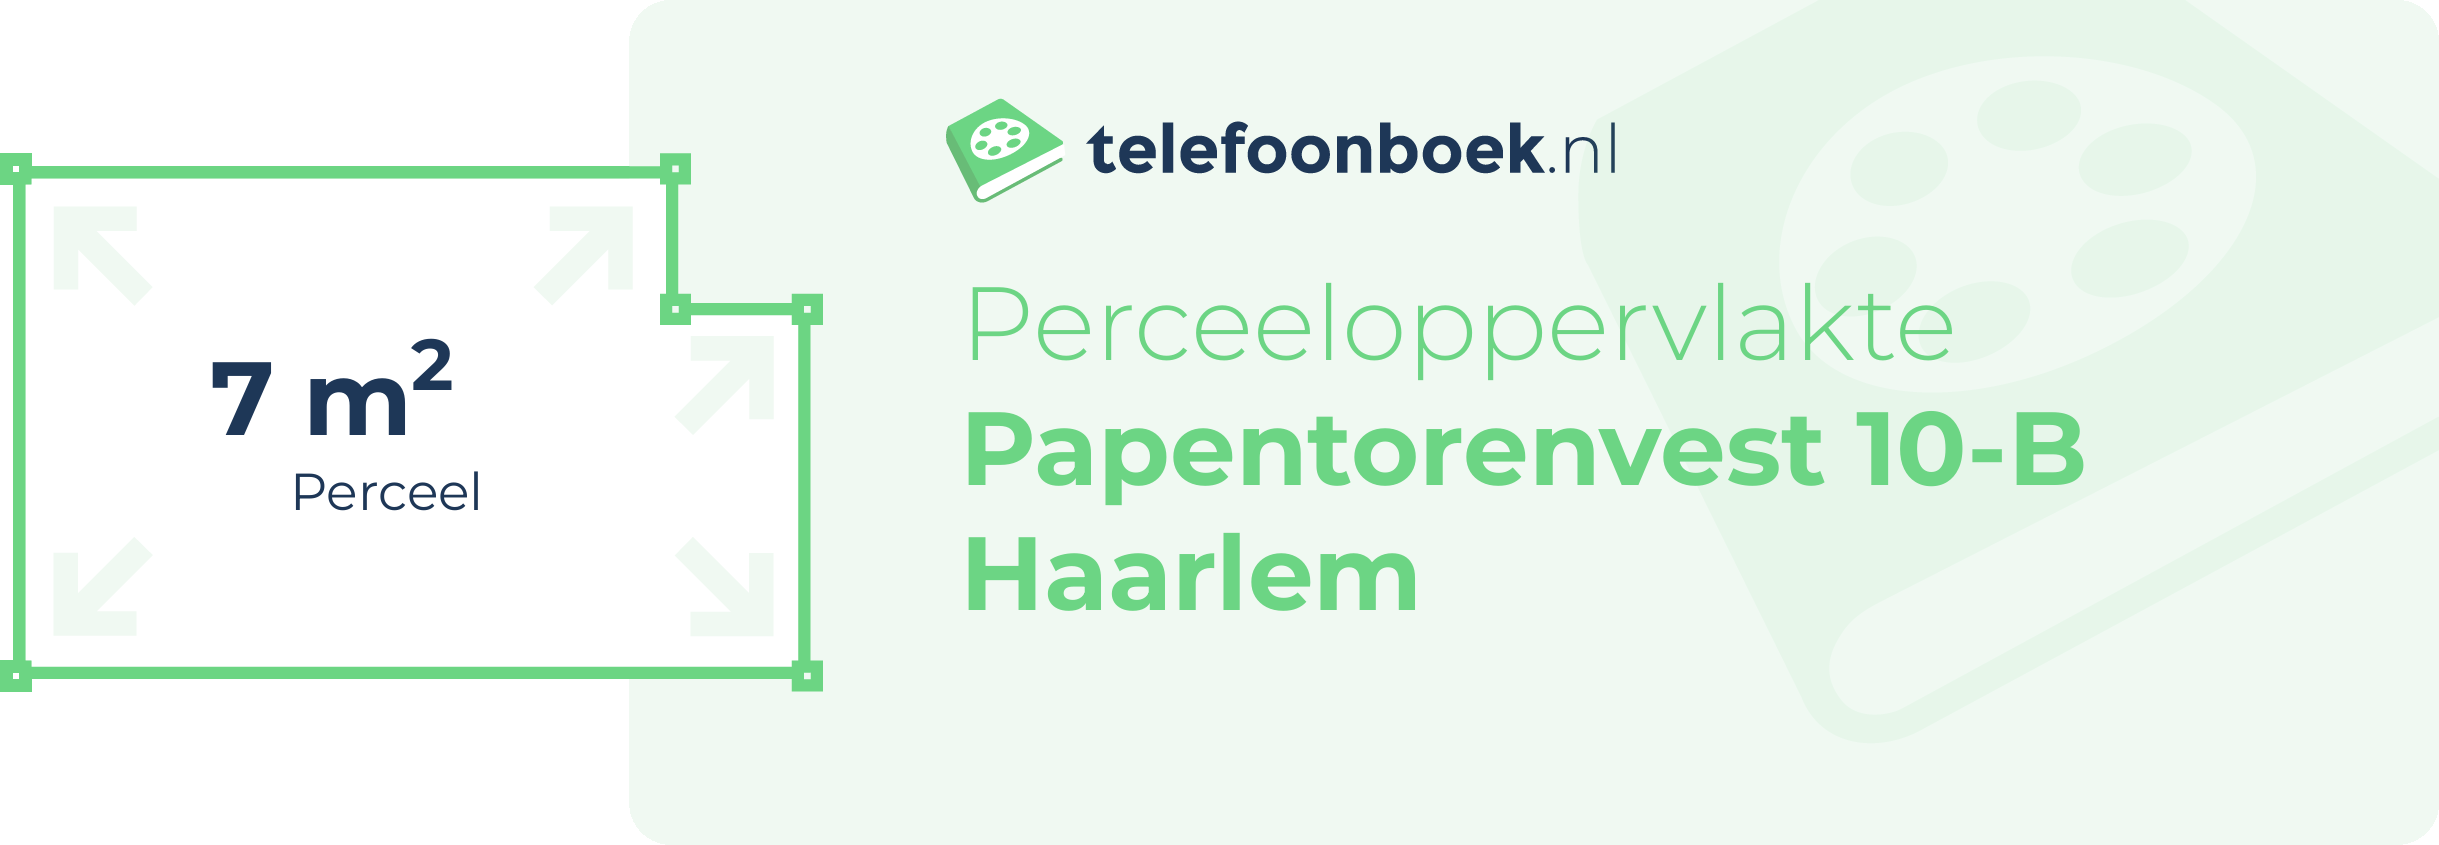 Perceeloppervlakte Papentorenvest 10-B Haarlem